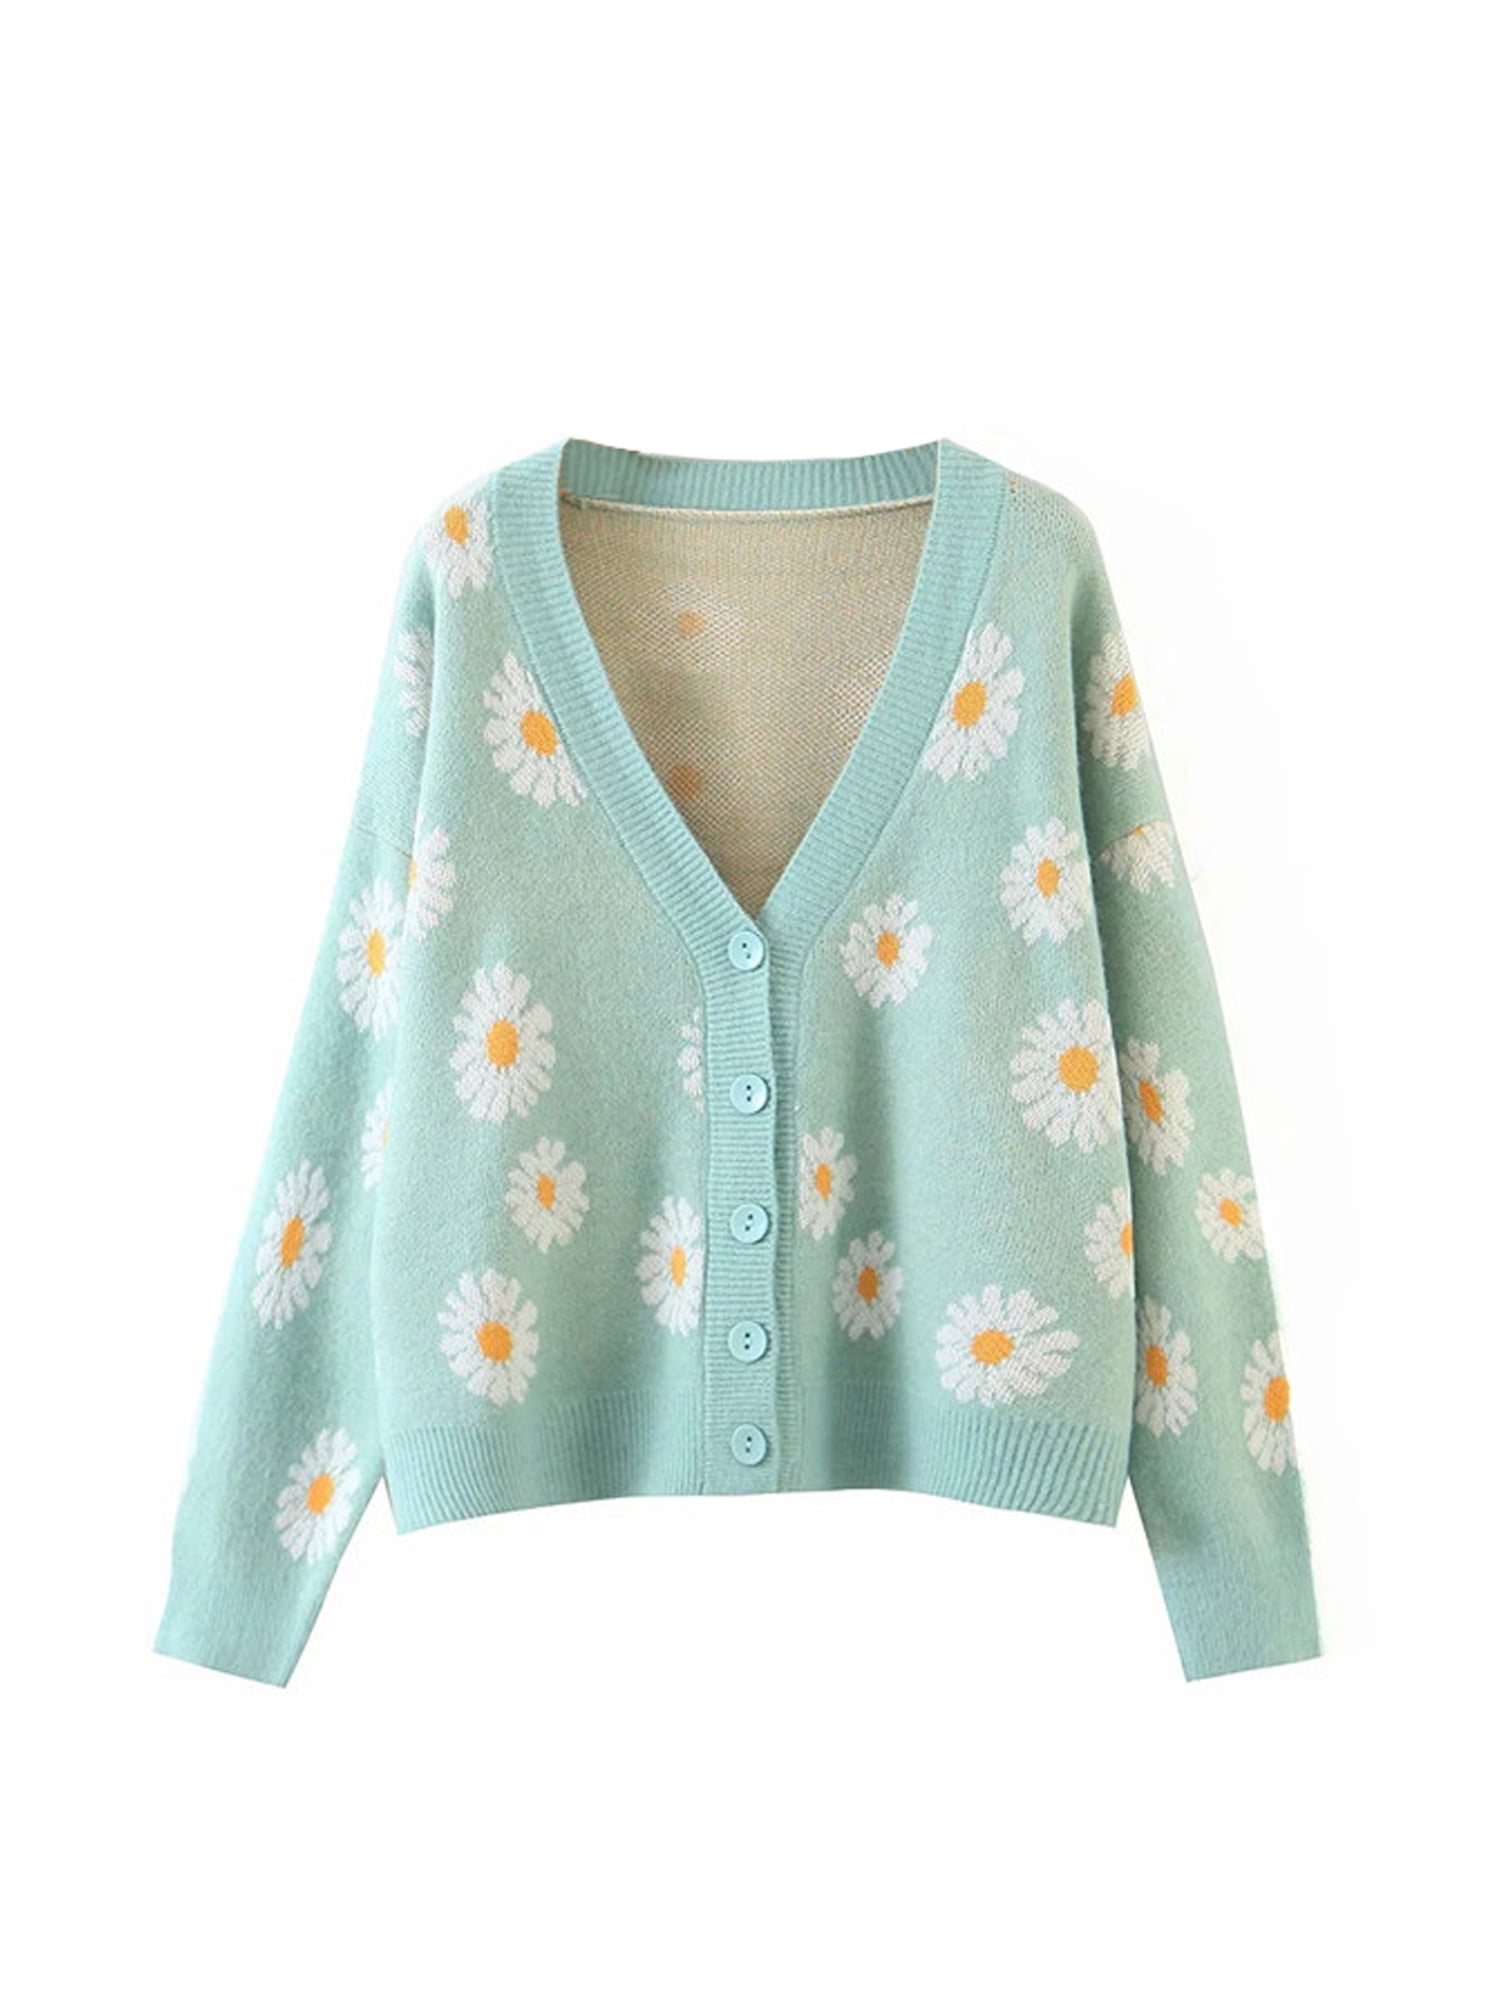 Coat Sleeve Little Sweater Floral Women Daisy Lossen TOPGOD Cardigan, Knit Loose Long V Casual Neck